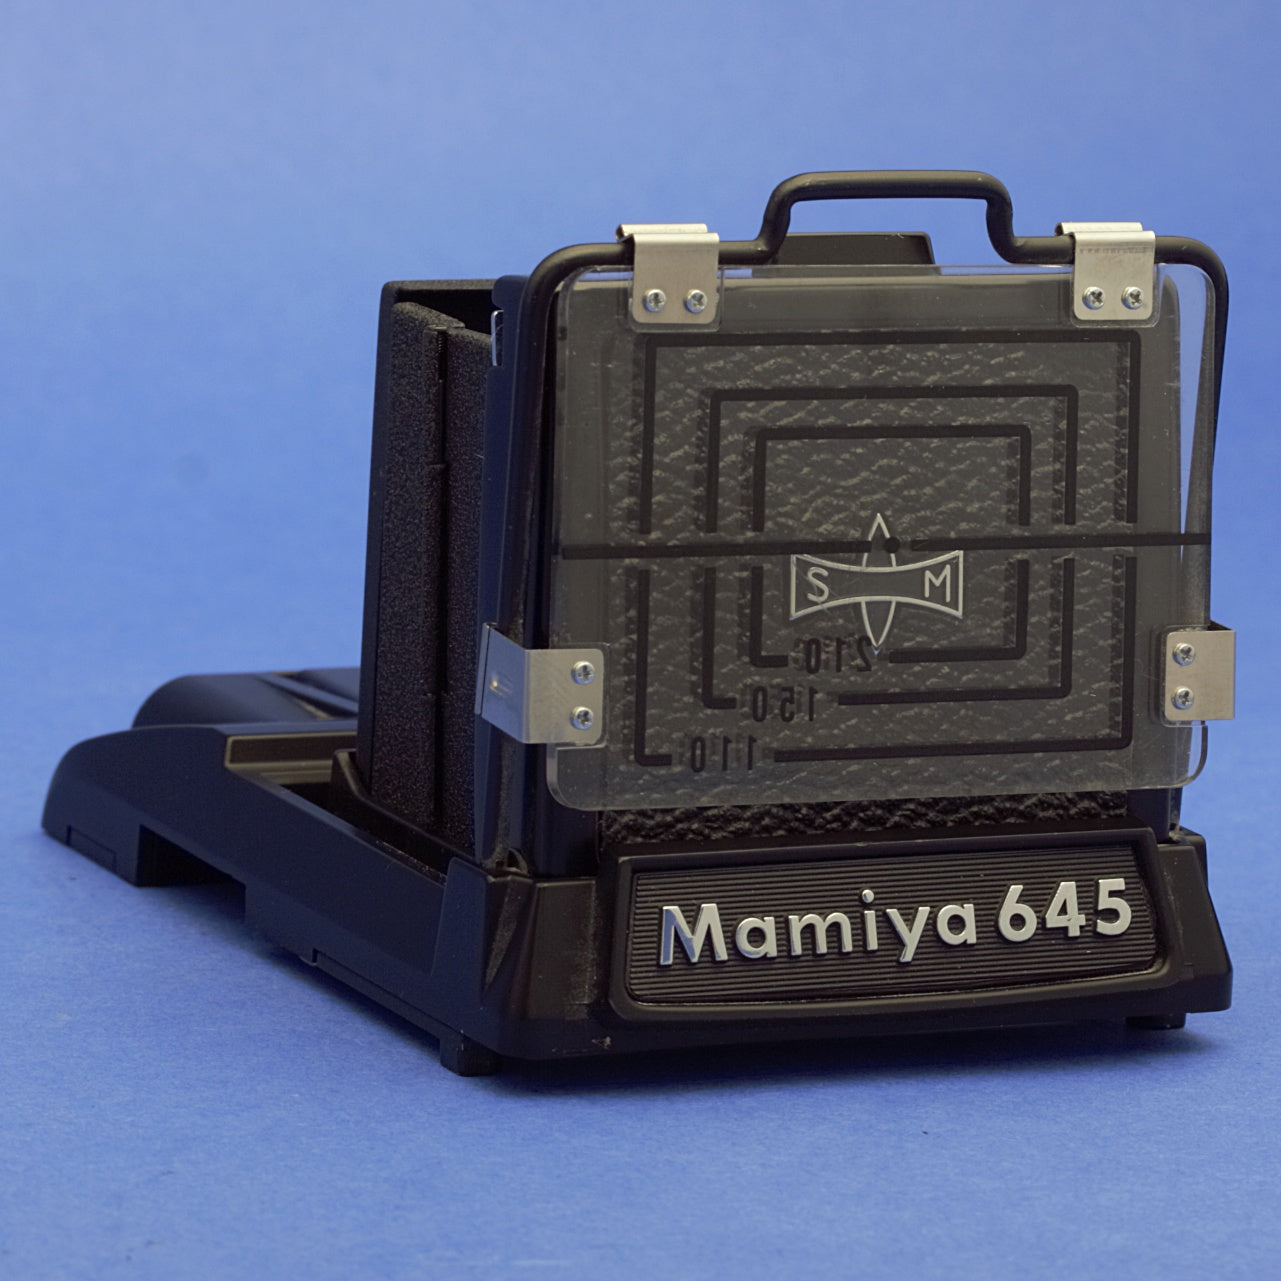 Mamiya Waist Level Finder for M645, 1000S Cameras Mint Condition